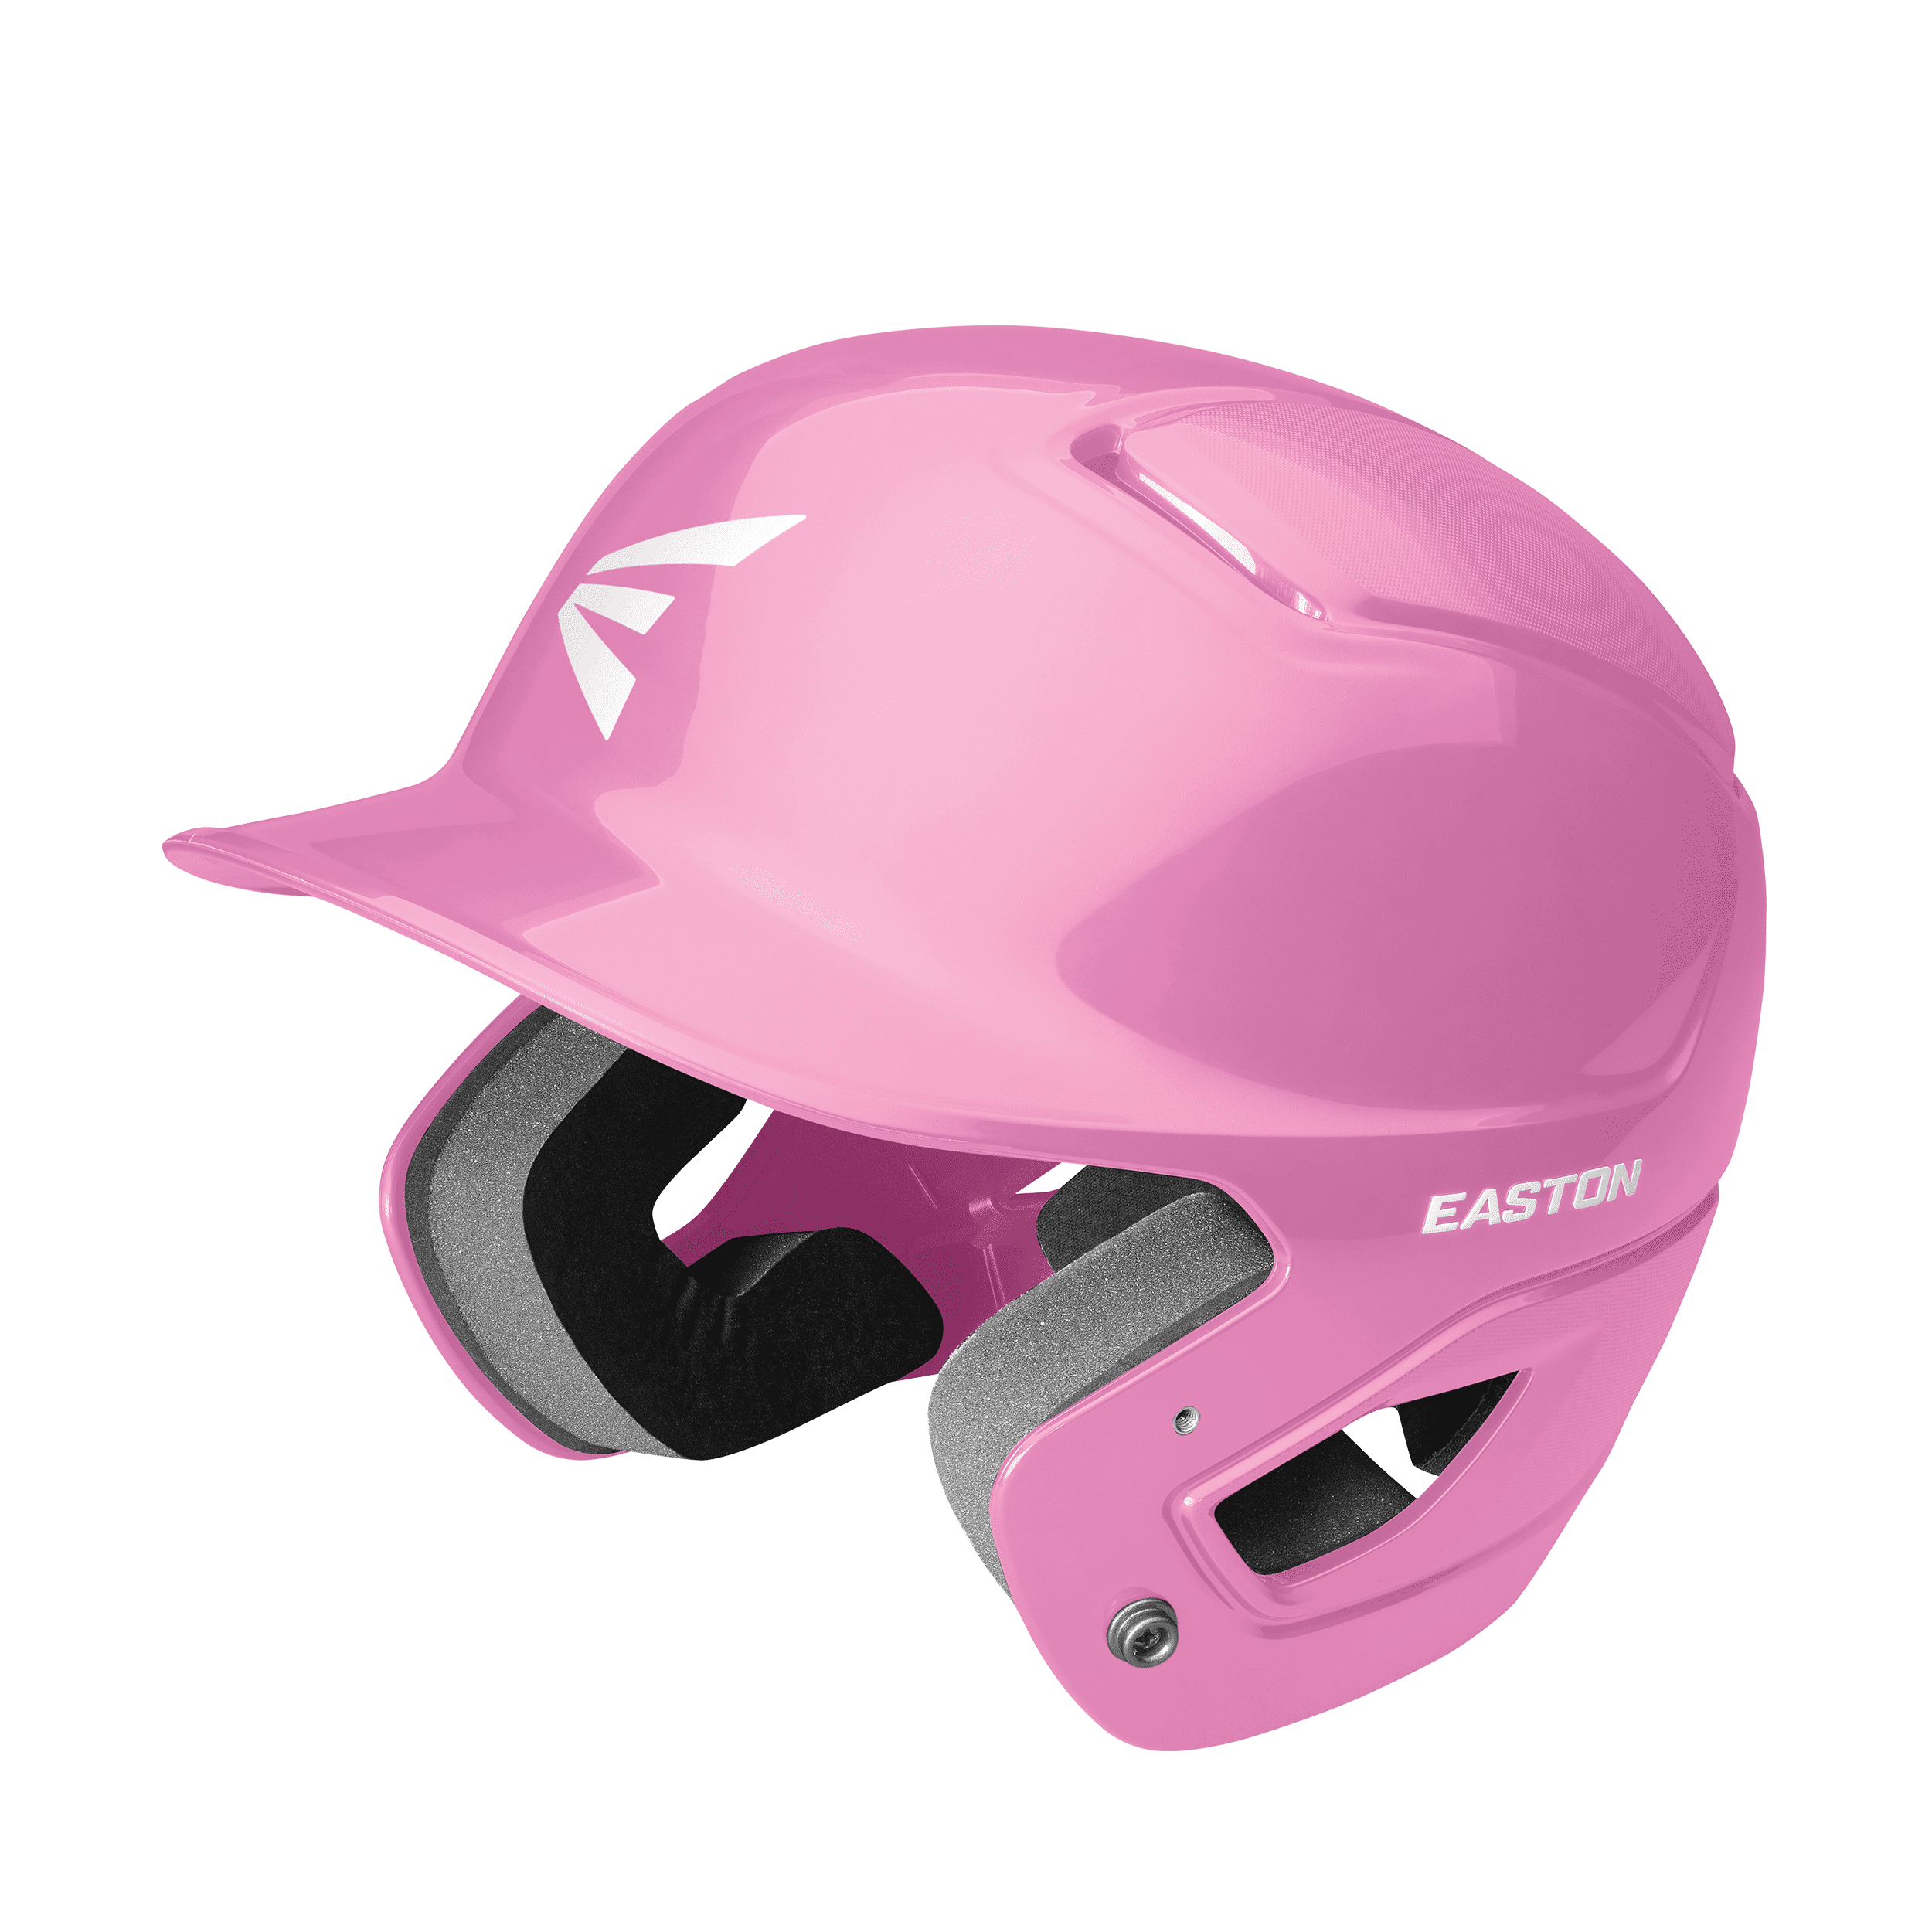 EASTON Natural Tee-Ball Softball Batting Helmet Pink Fits 6 to 6-1/2 TB Size 